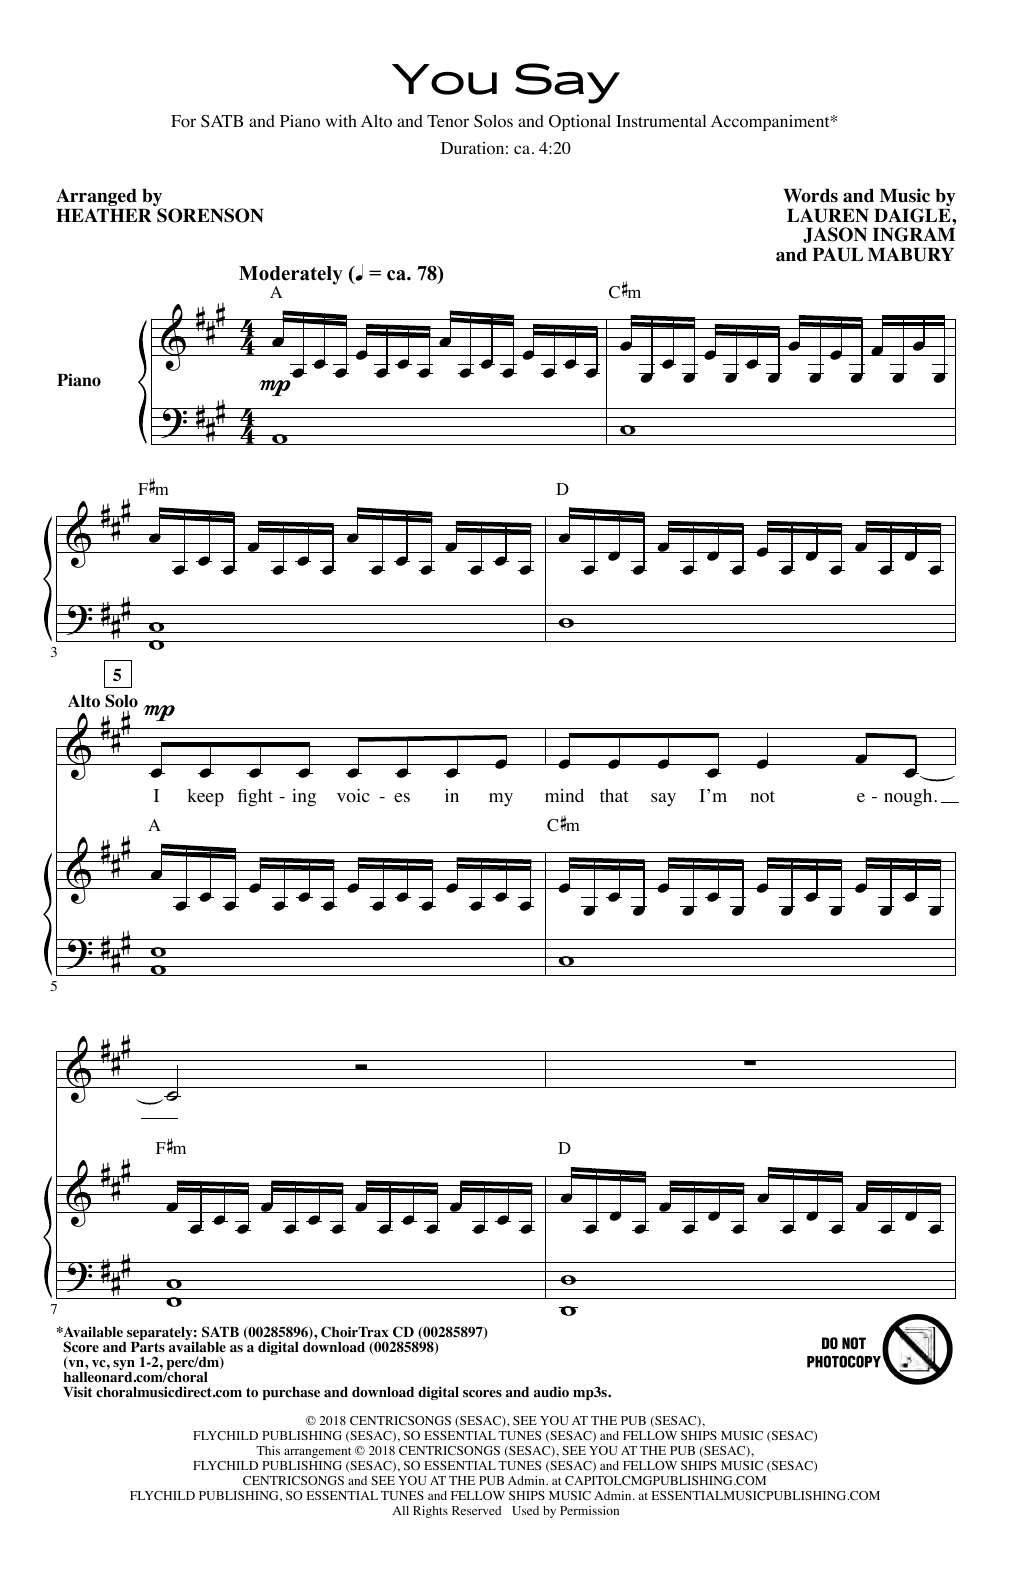 Lauren Daigle You Say (arr. Heather Sorenson) Sheet Music Notes & Chords for SATB Choir - Download or Print PDF